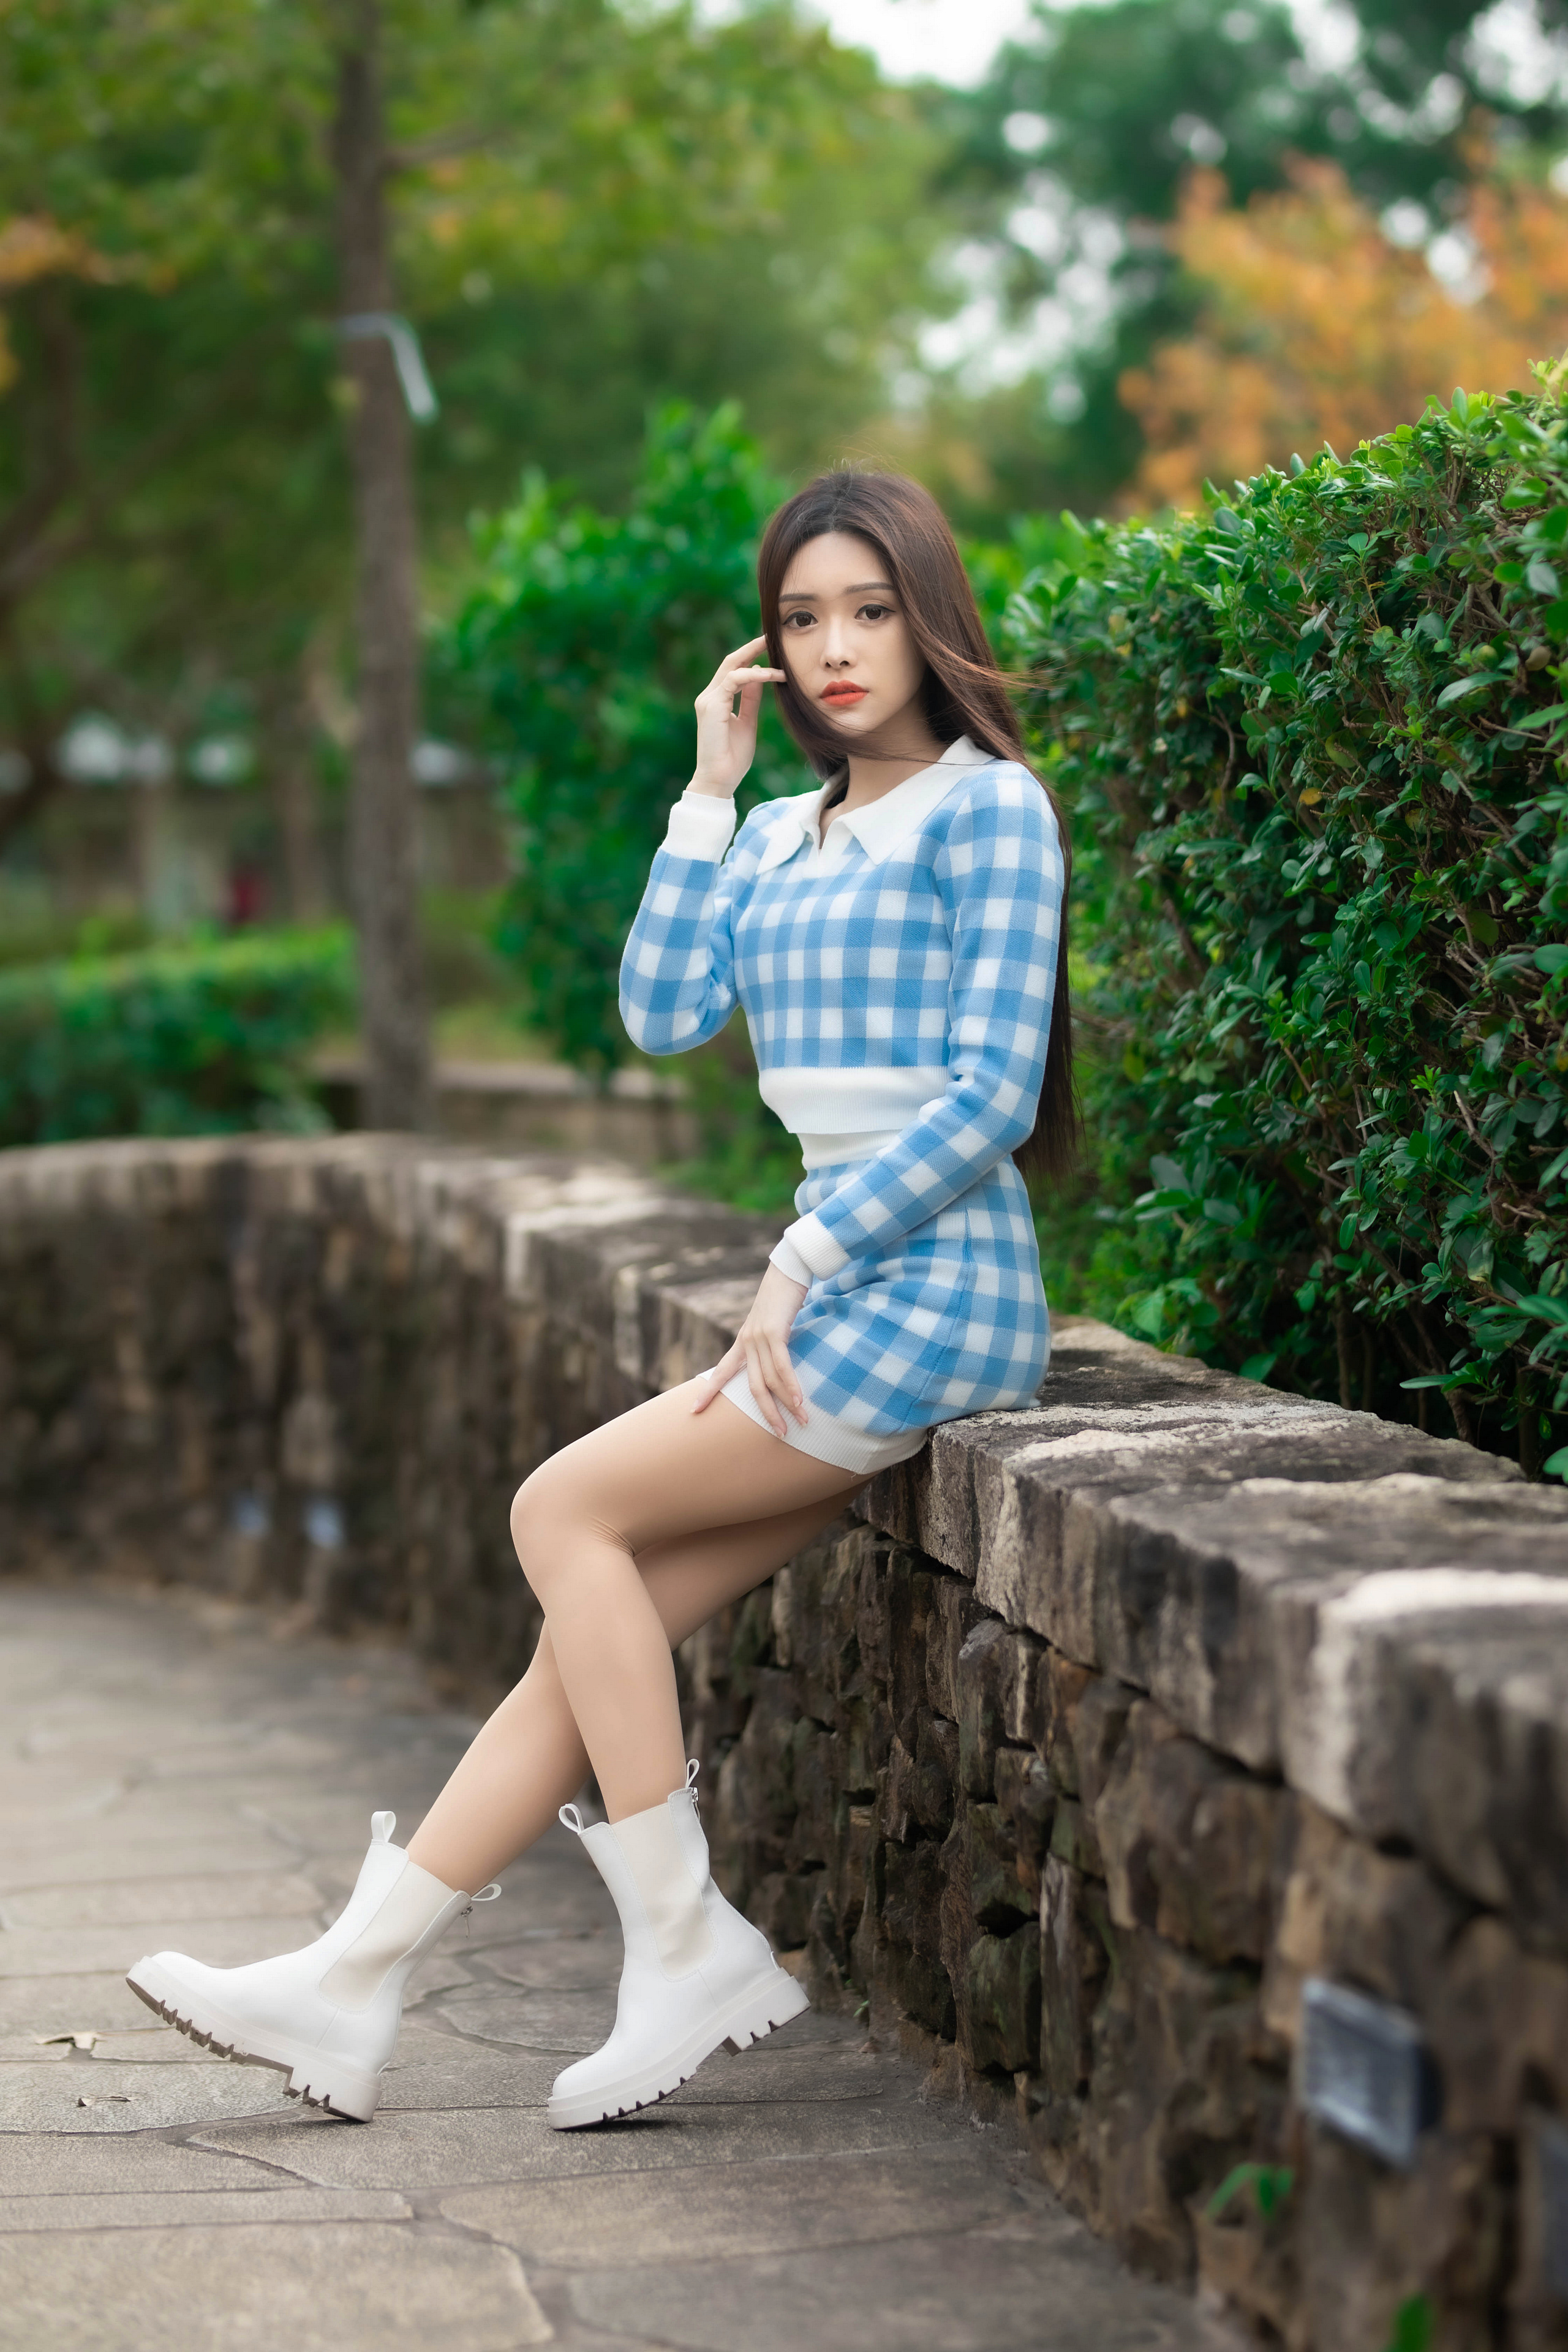 Asian Model Women Long Hair Dark Hair Depth Of Field Women Outdoors Sitting Trees Bushes Ankle Boots 2560x3840